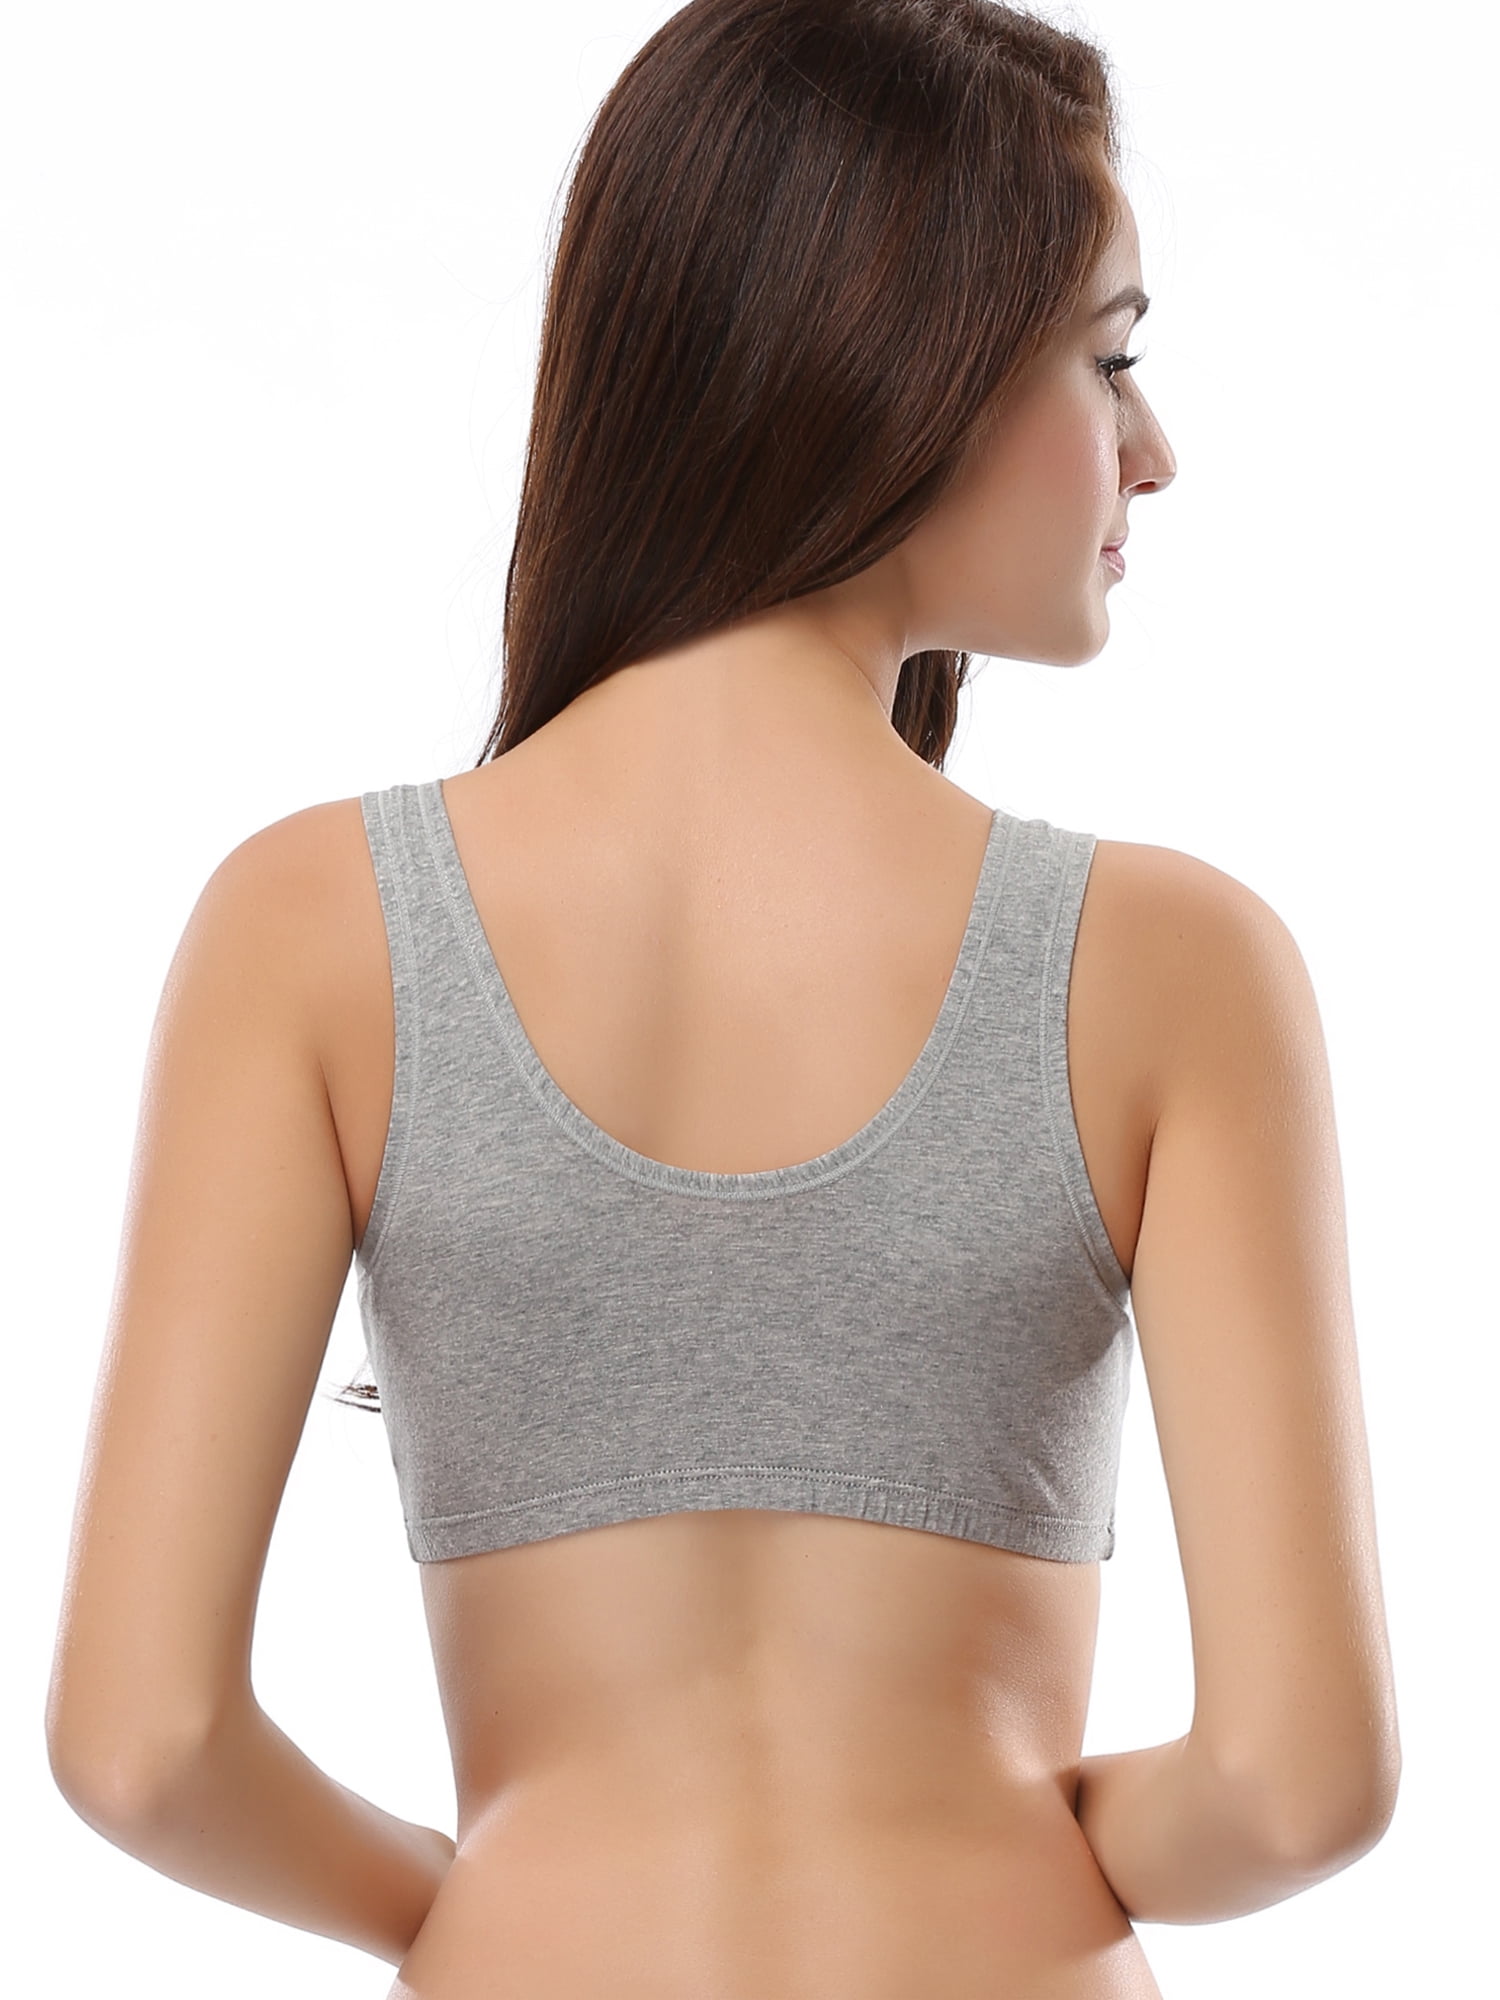 LOOLANA's Breathable Sports Bra  Yoga sports bra, Sports bra, Women's sports  bras